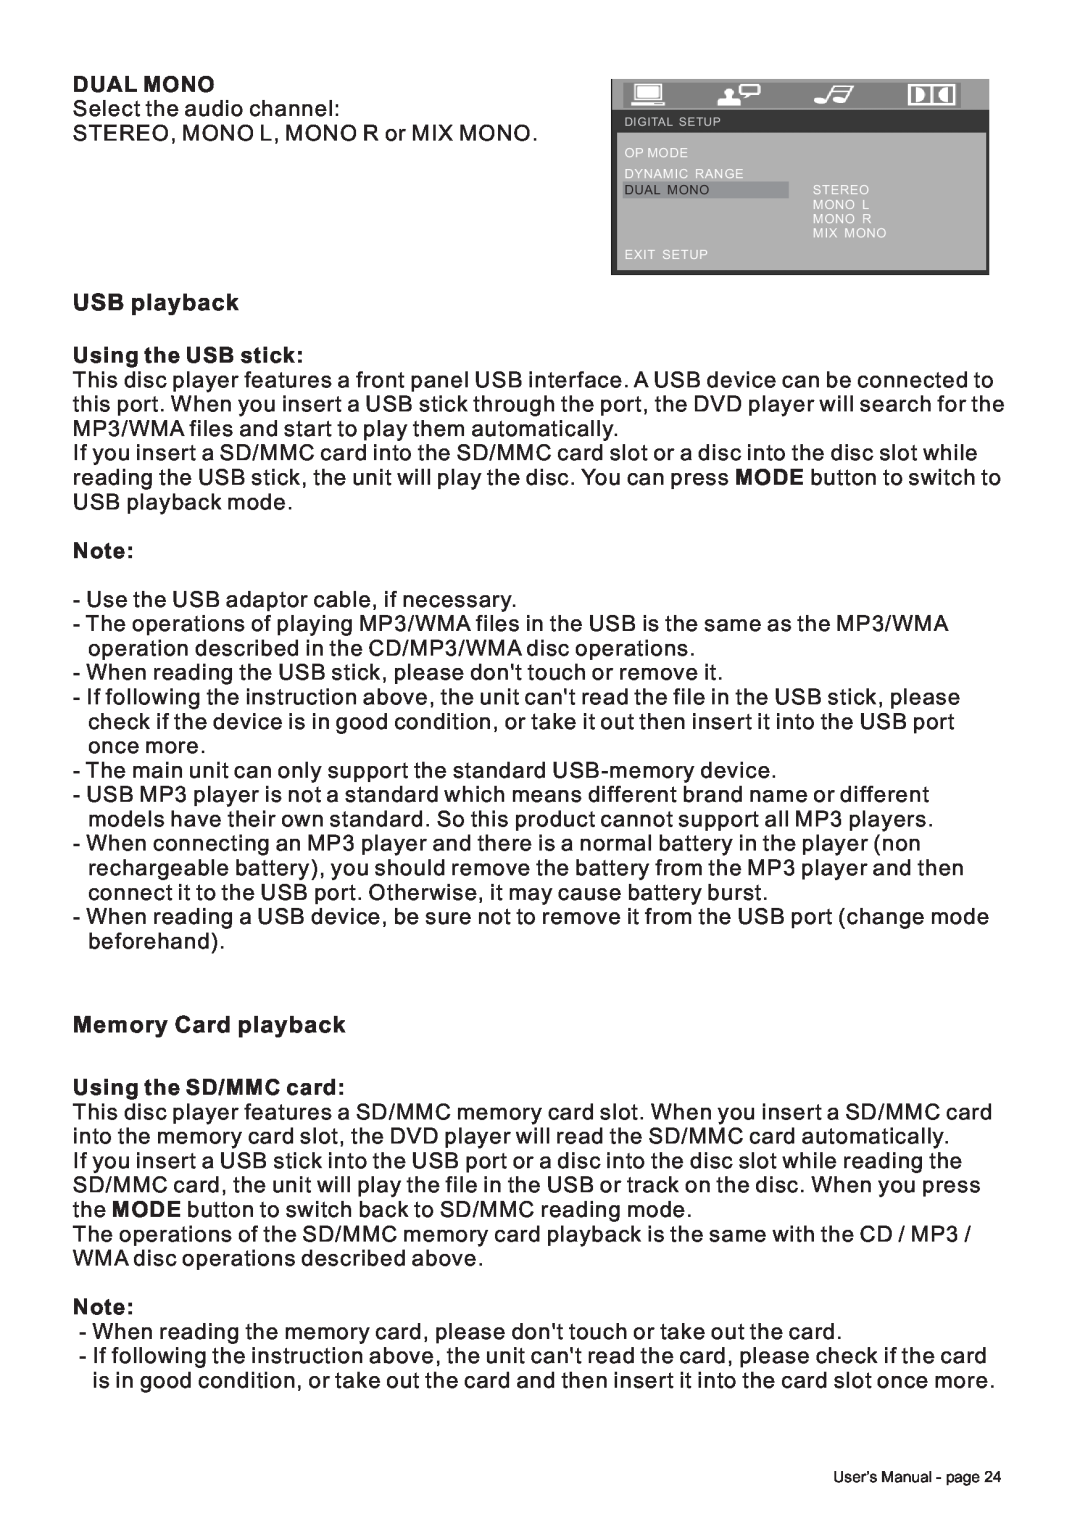 Boss Audio Systems BV8728B manual USB playback, Memory Card playback, Dual Mono, Using the USB stick, Using the SD/MMC card 